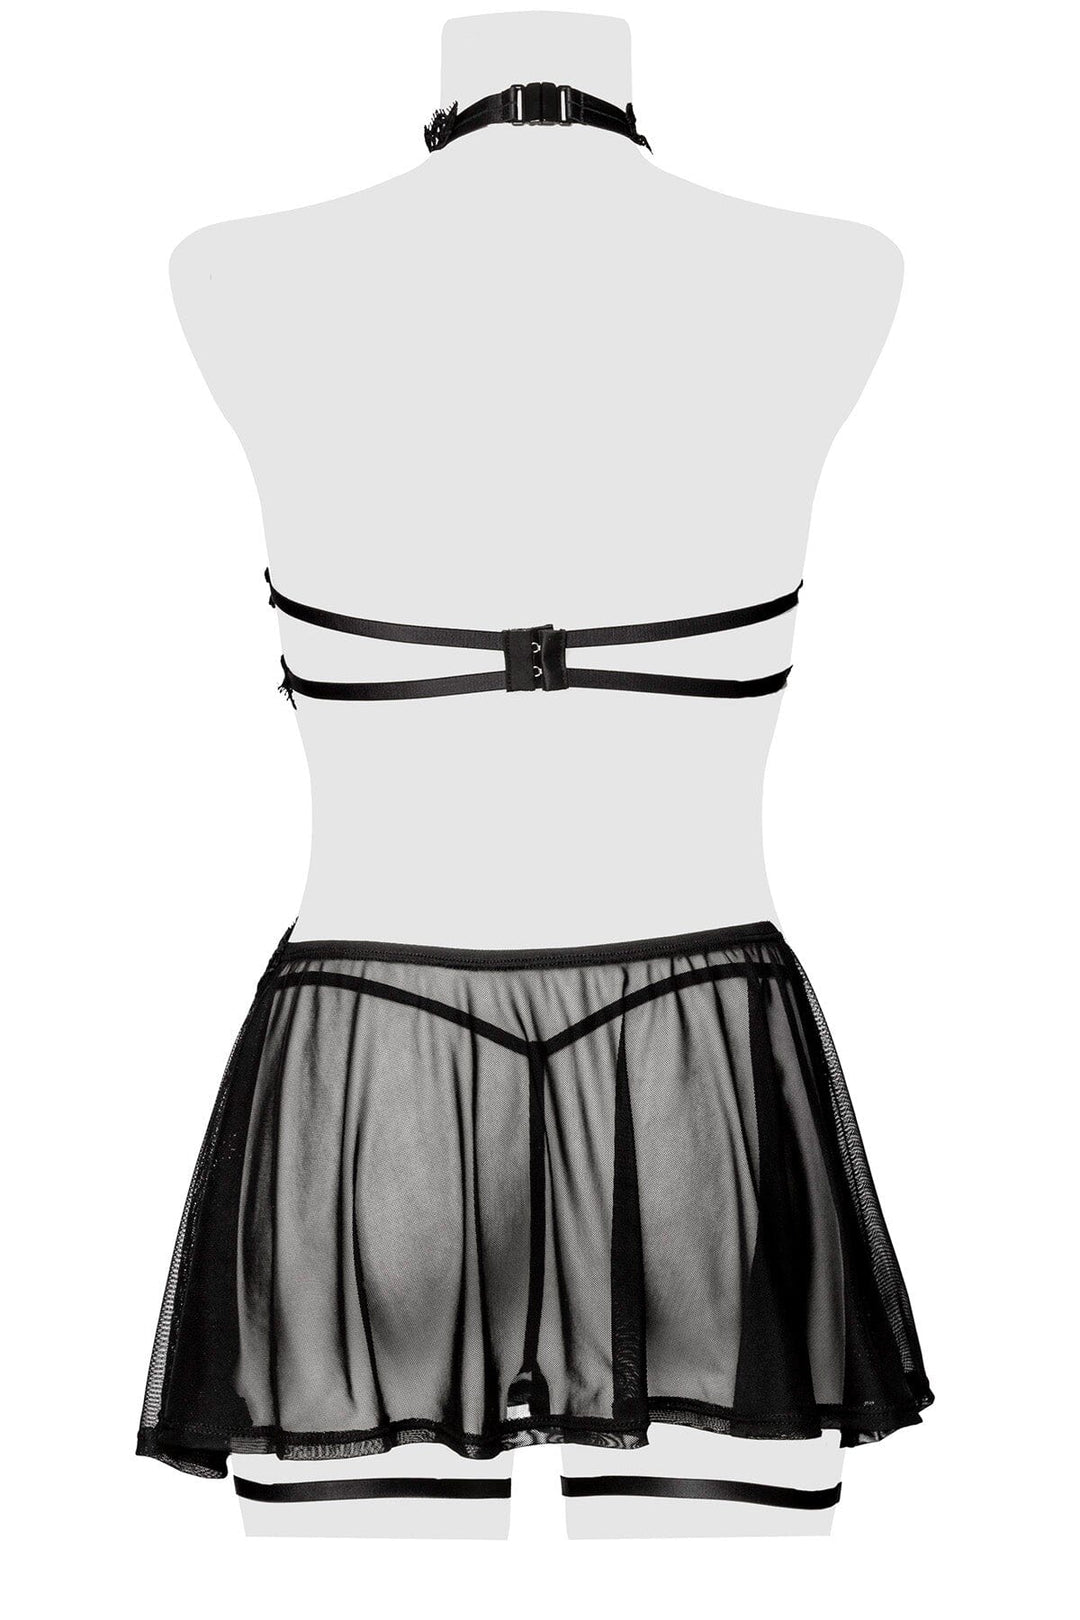 Mesh & Lace Flirty Lingerie Skirt Set-Fetish Sets-Grey Velvet-SEXYSHOES.COM